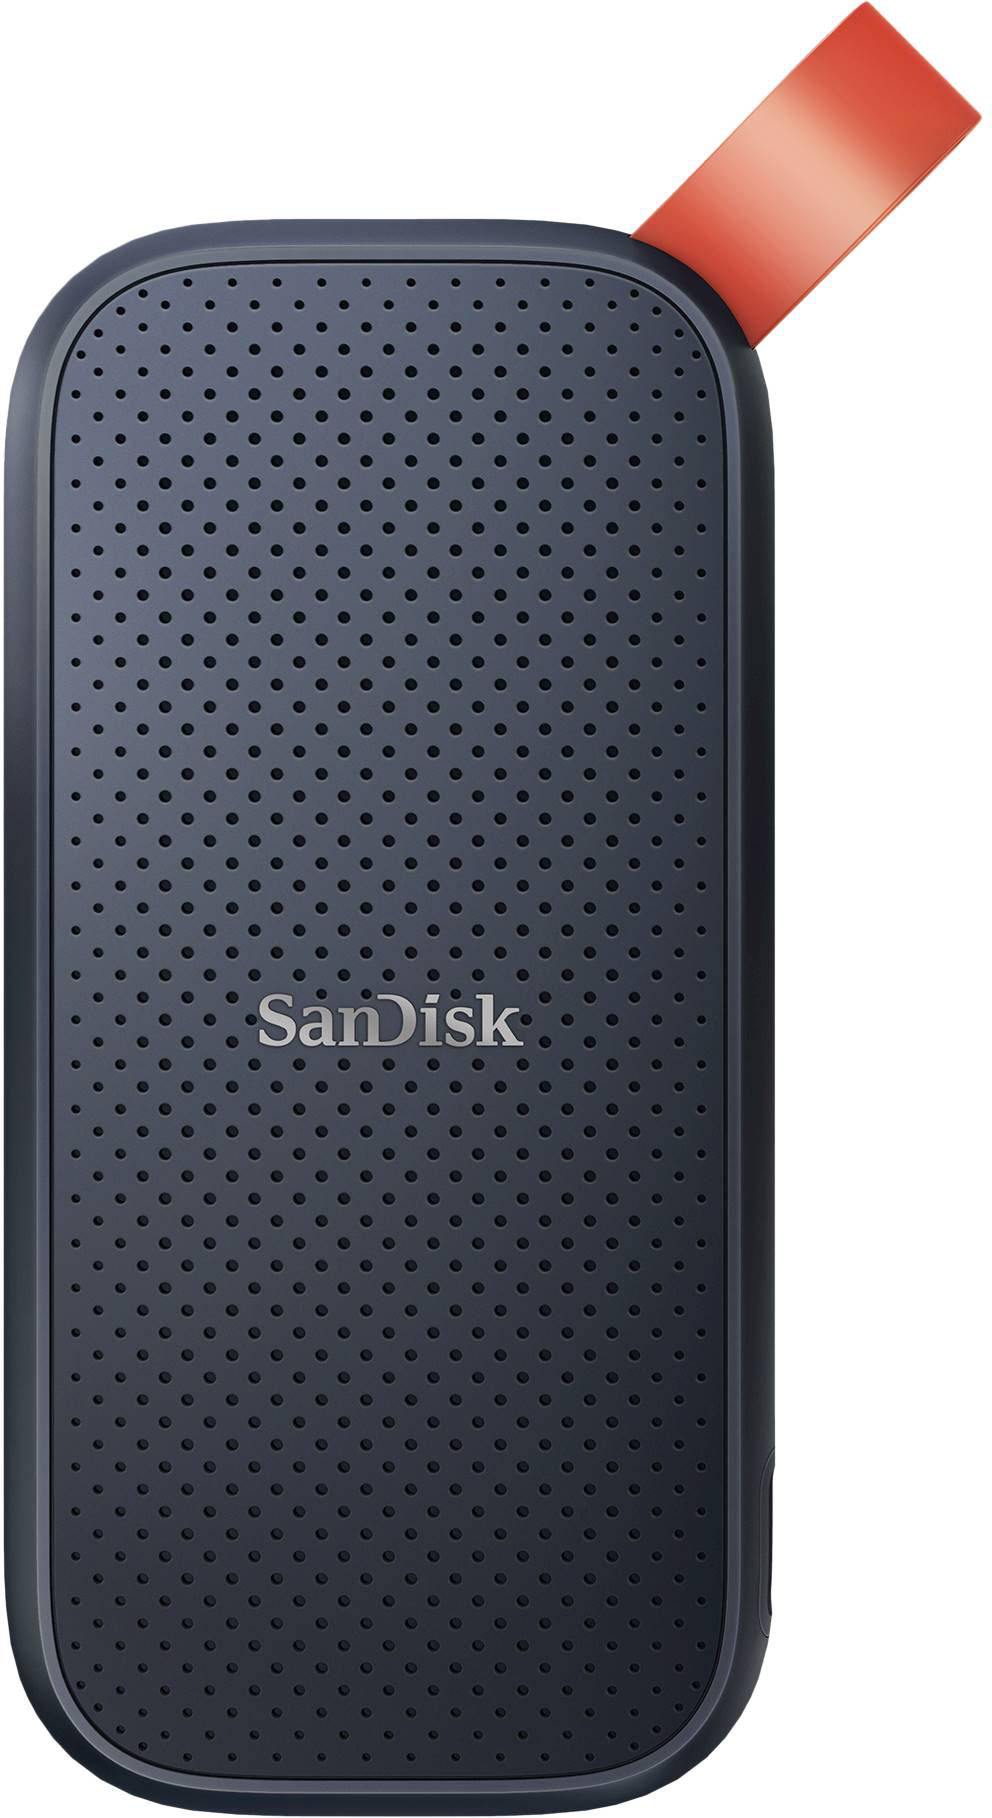 SanDisk – 2TB External USB 3.2 Gen 2 Type C Portable SSD – Just $179.99 at Best Buy